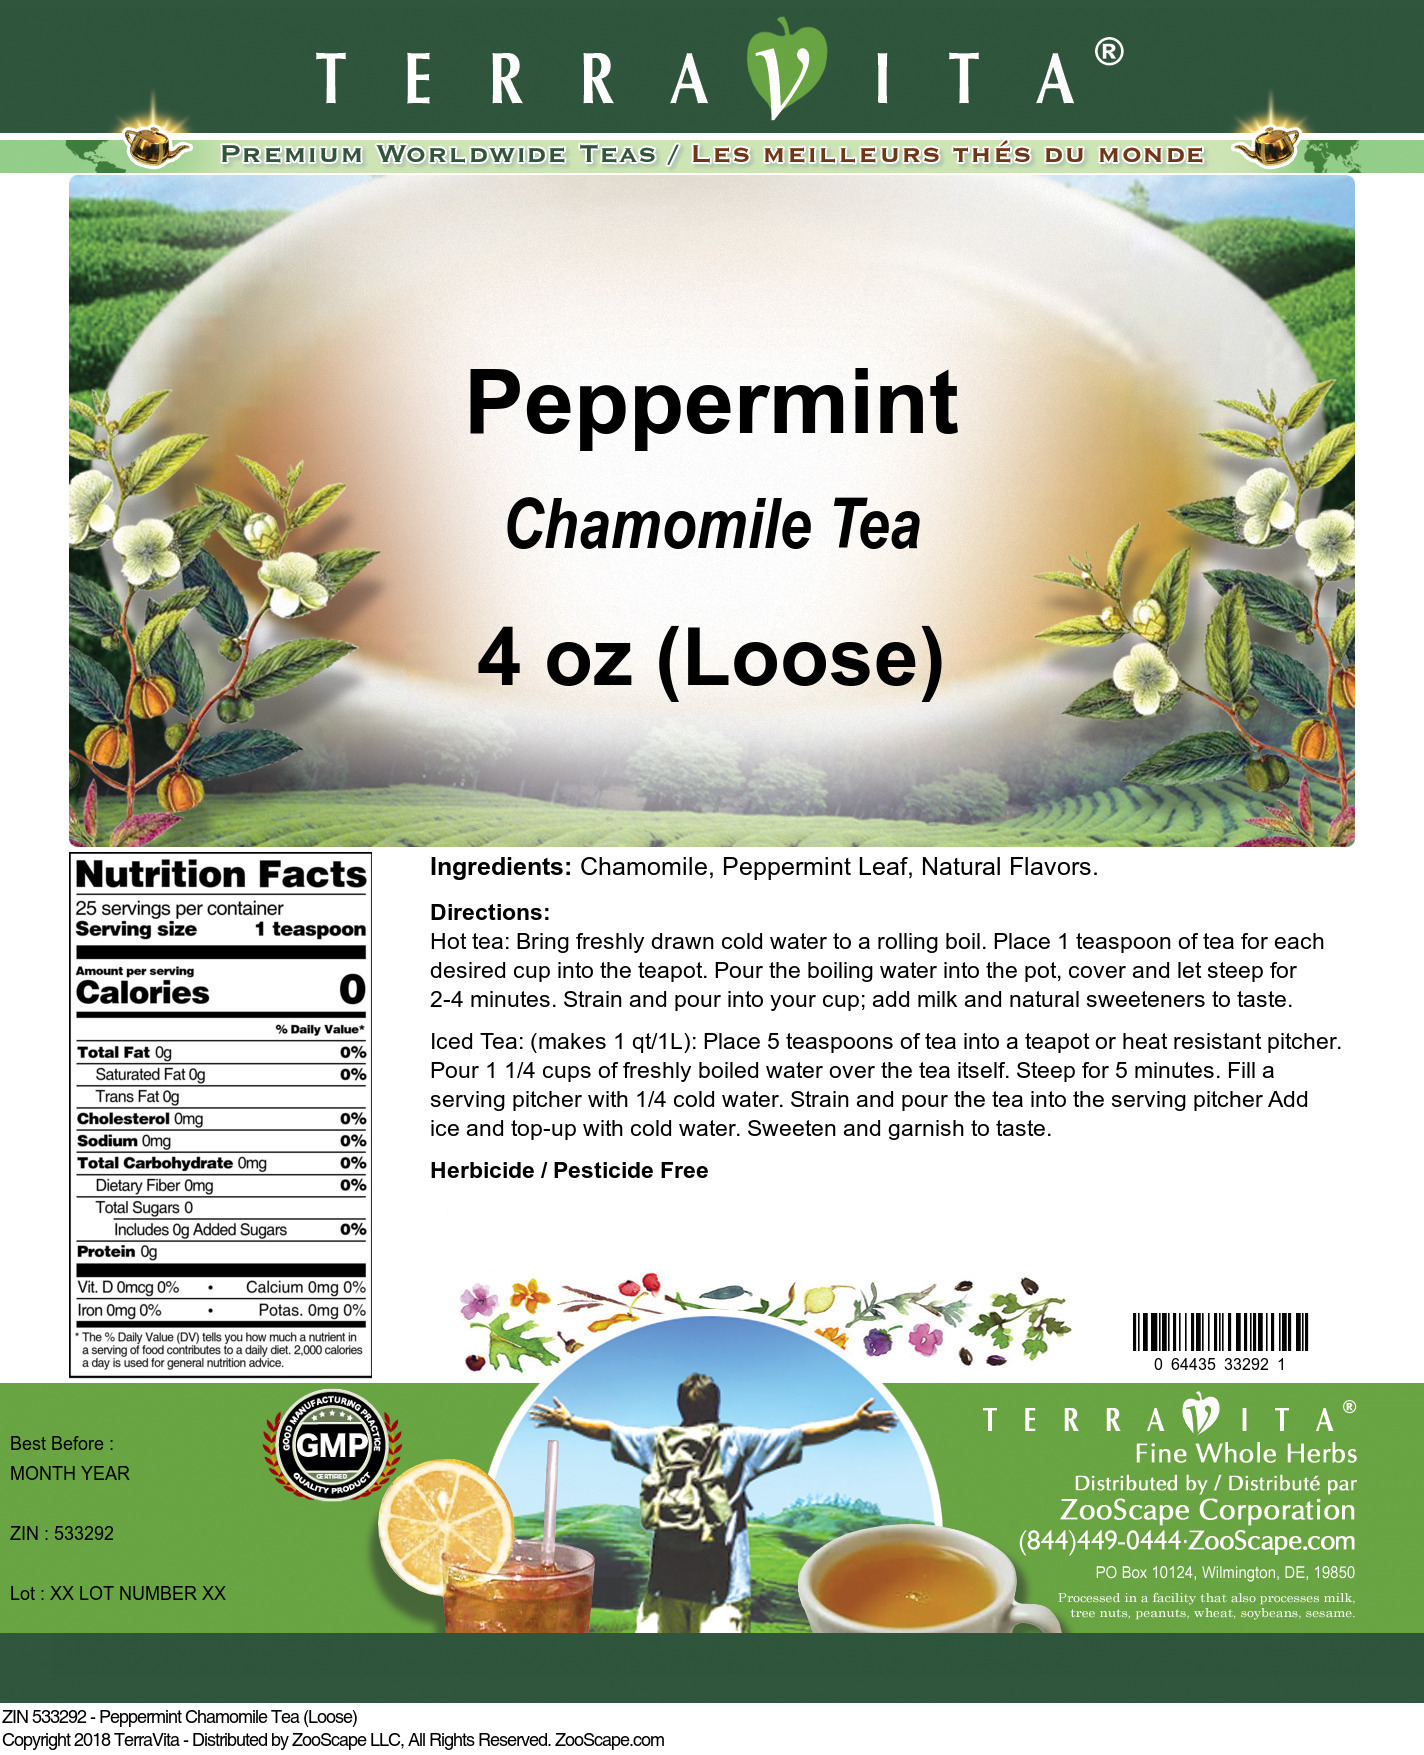 Peppermint Chamomile Tea (Loose) - Label